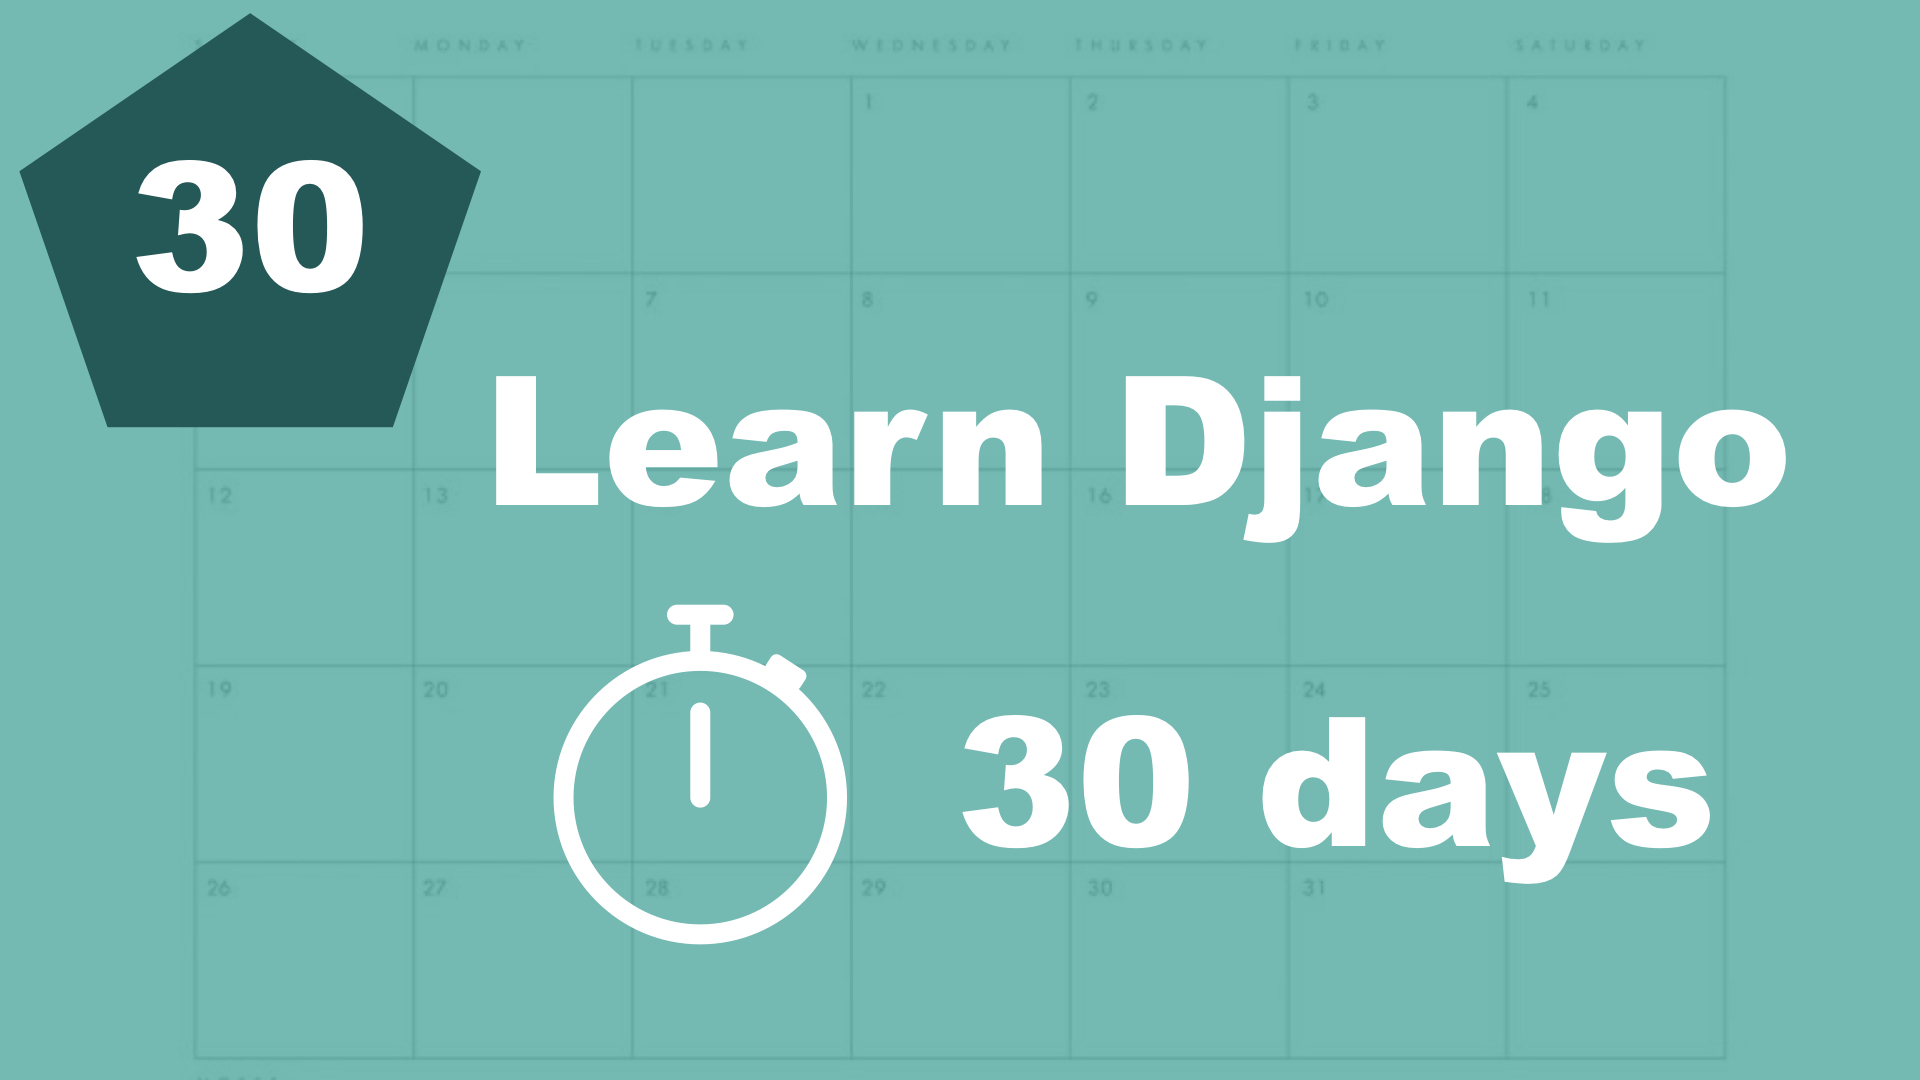 Where to continue? - 30 days of Django